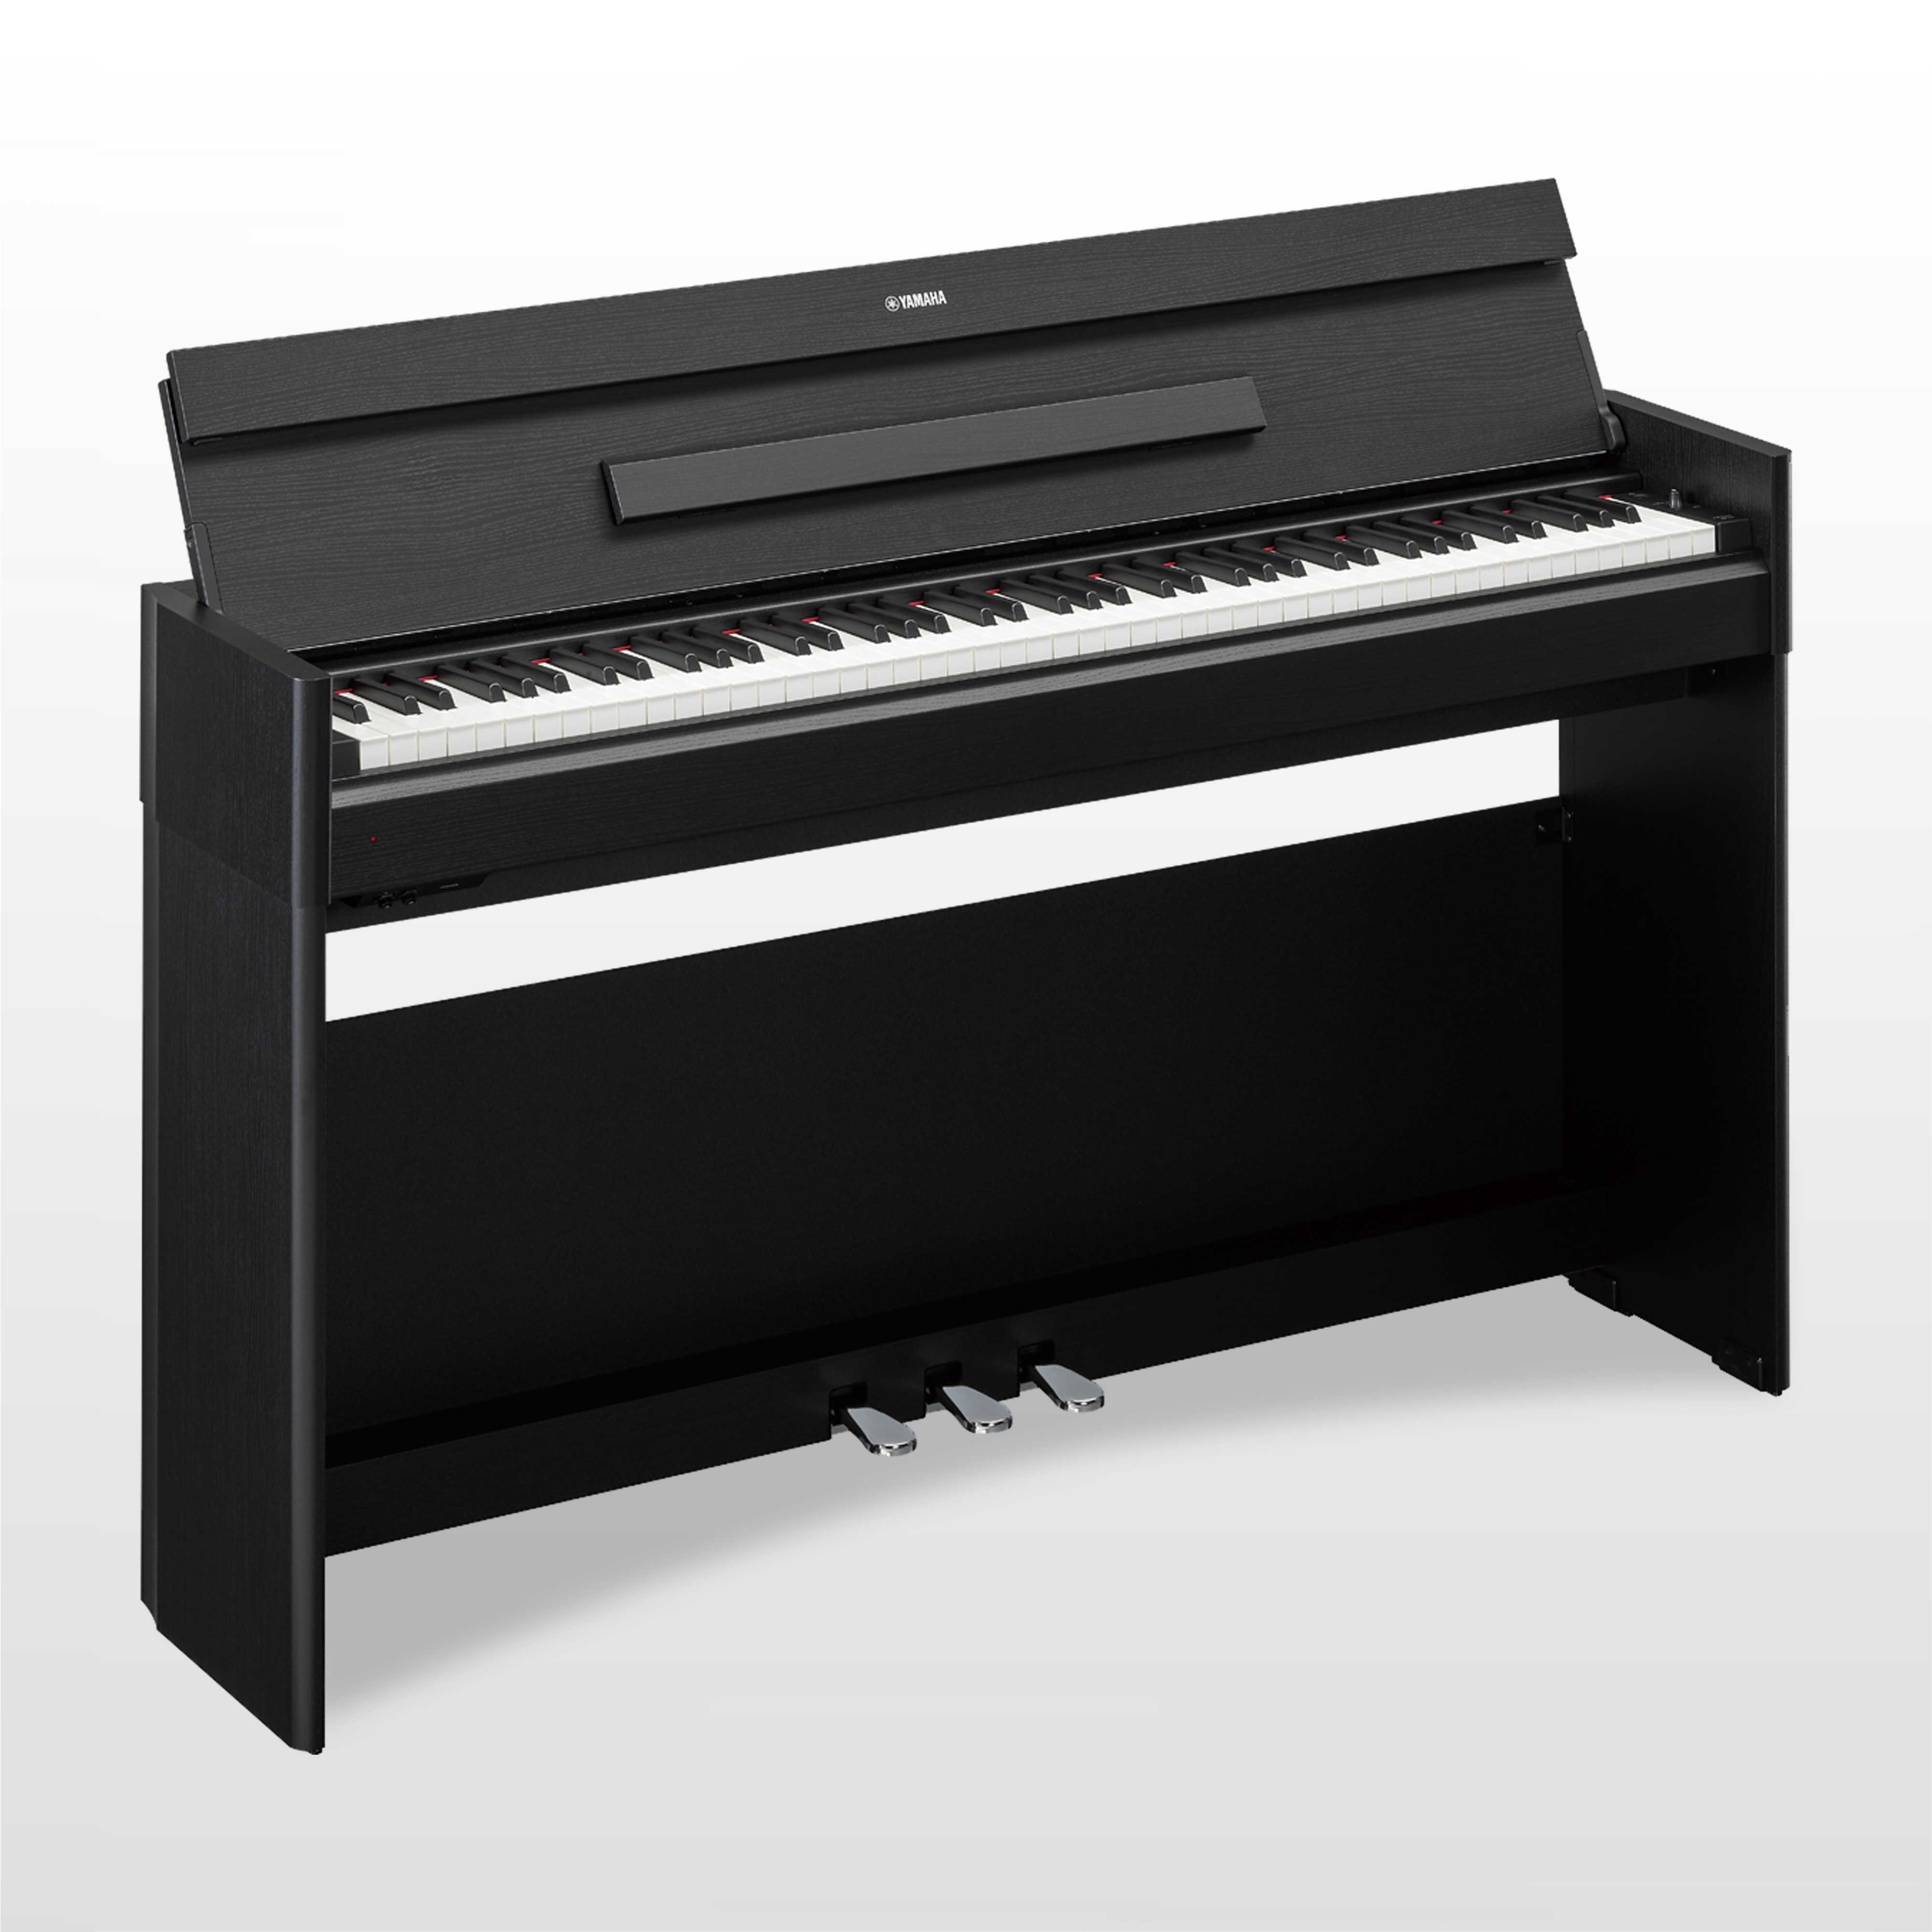 YDP-S54 - Übersicht - ARIUS - Pianos - Musikinstrumente ...